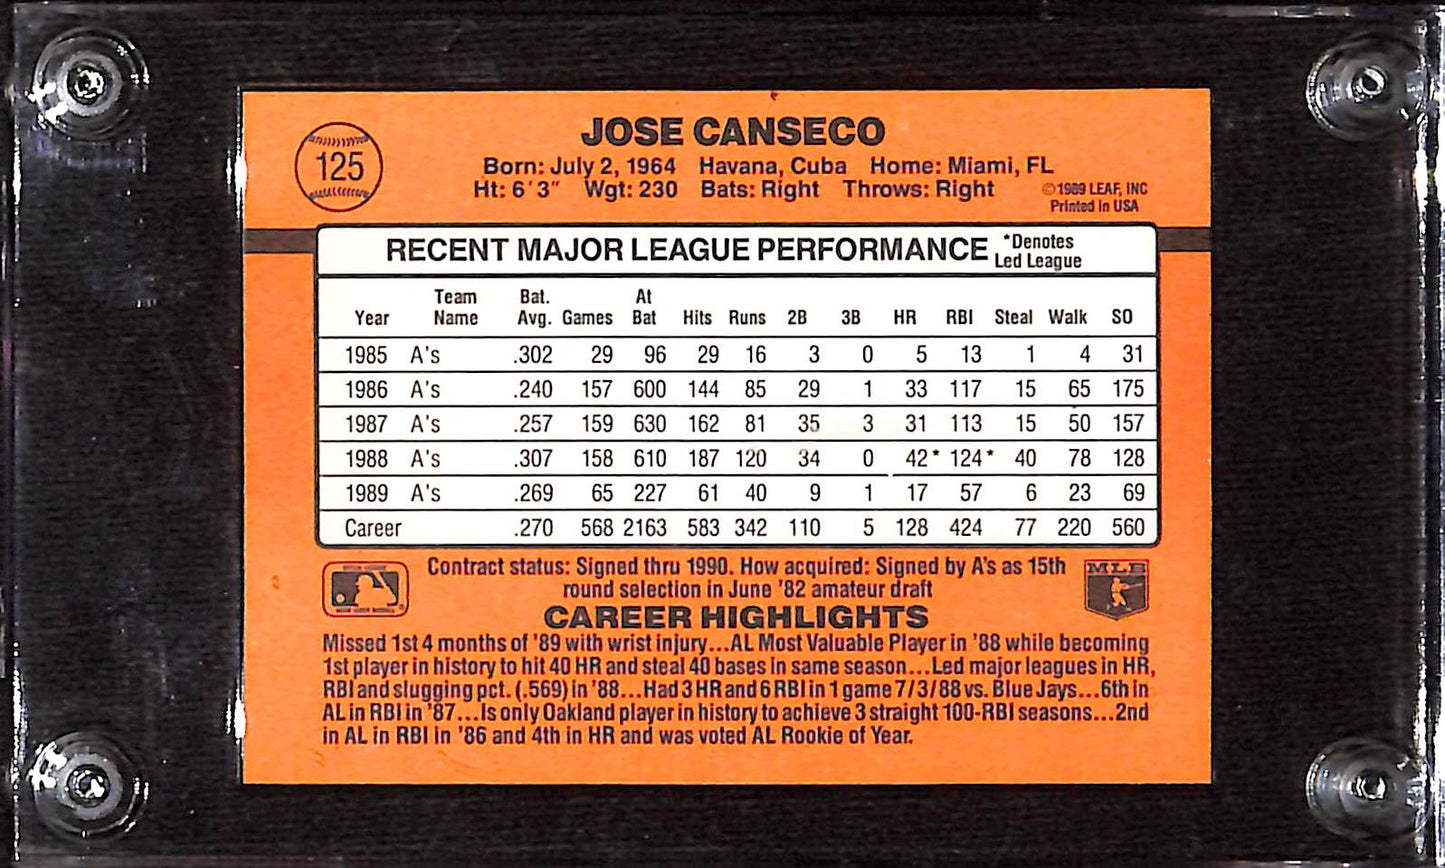 FIINR Baseball Card 1990 Donruss Jose Canseco Baseball Error Card #125 - Error Card - Mint Condition